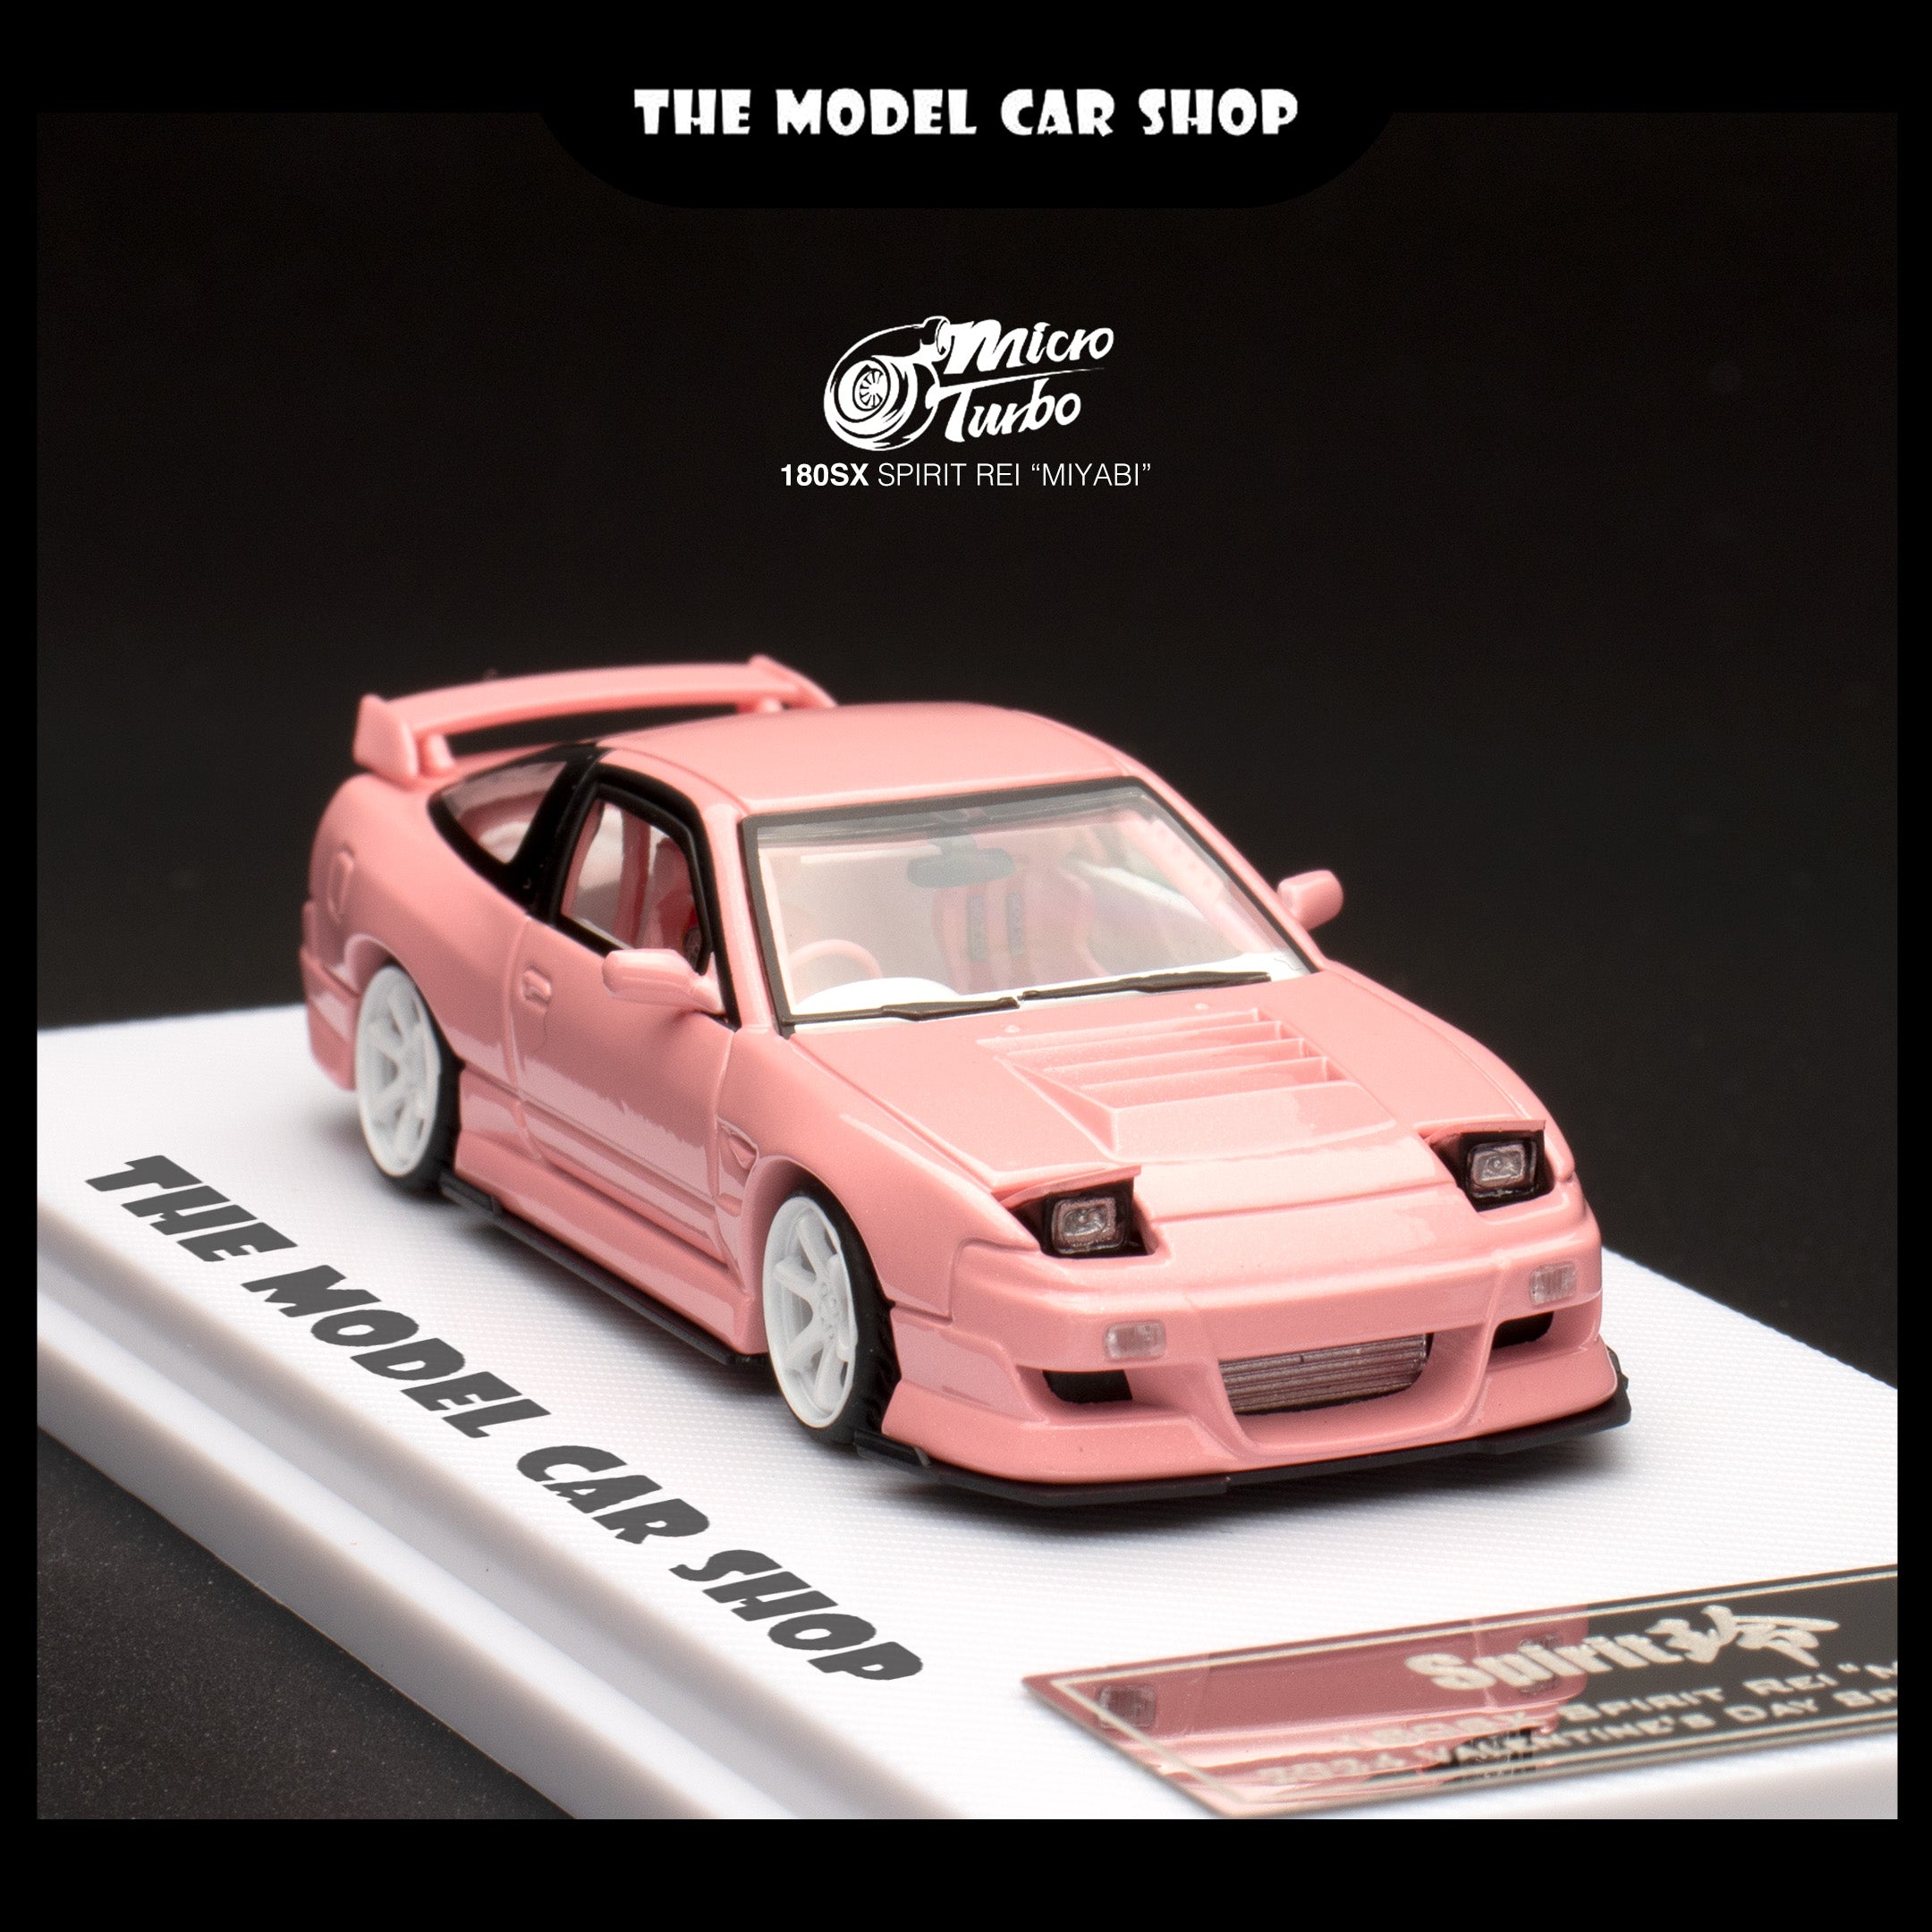 Micro turbo] Custom 180SX, Pink Valentine | The Model Car Shop